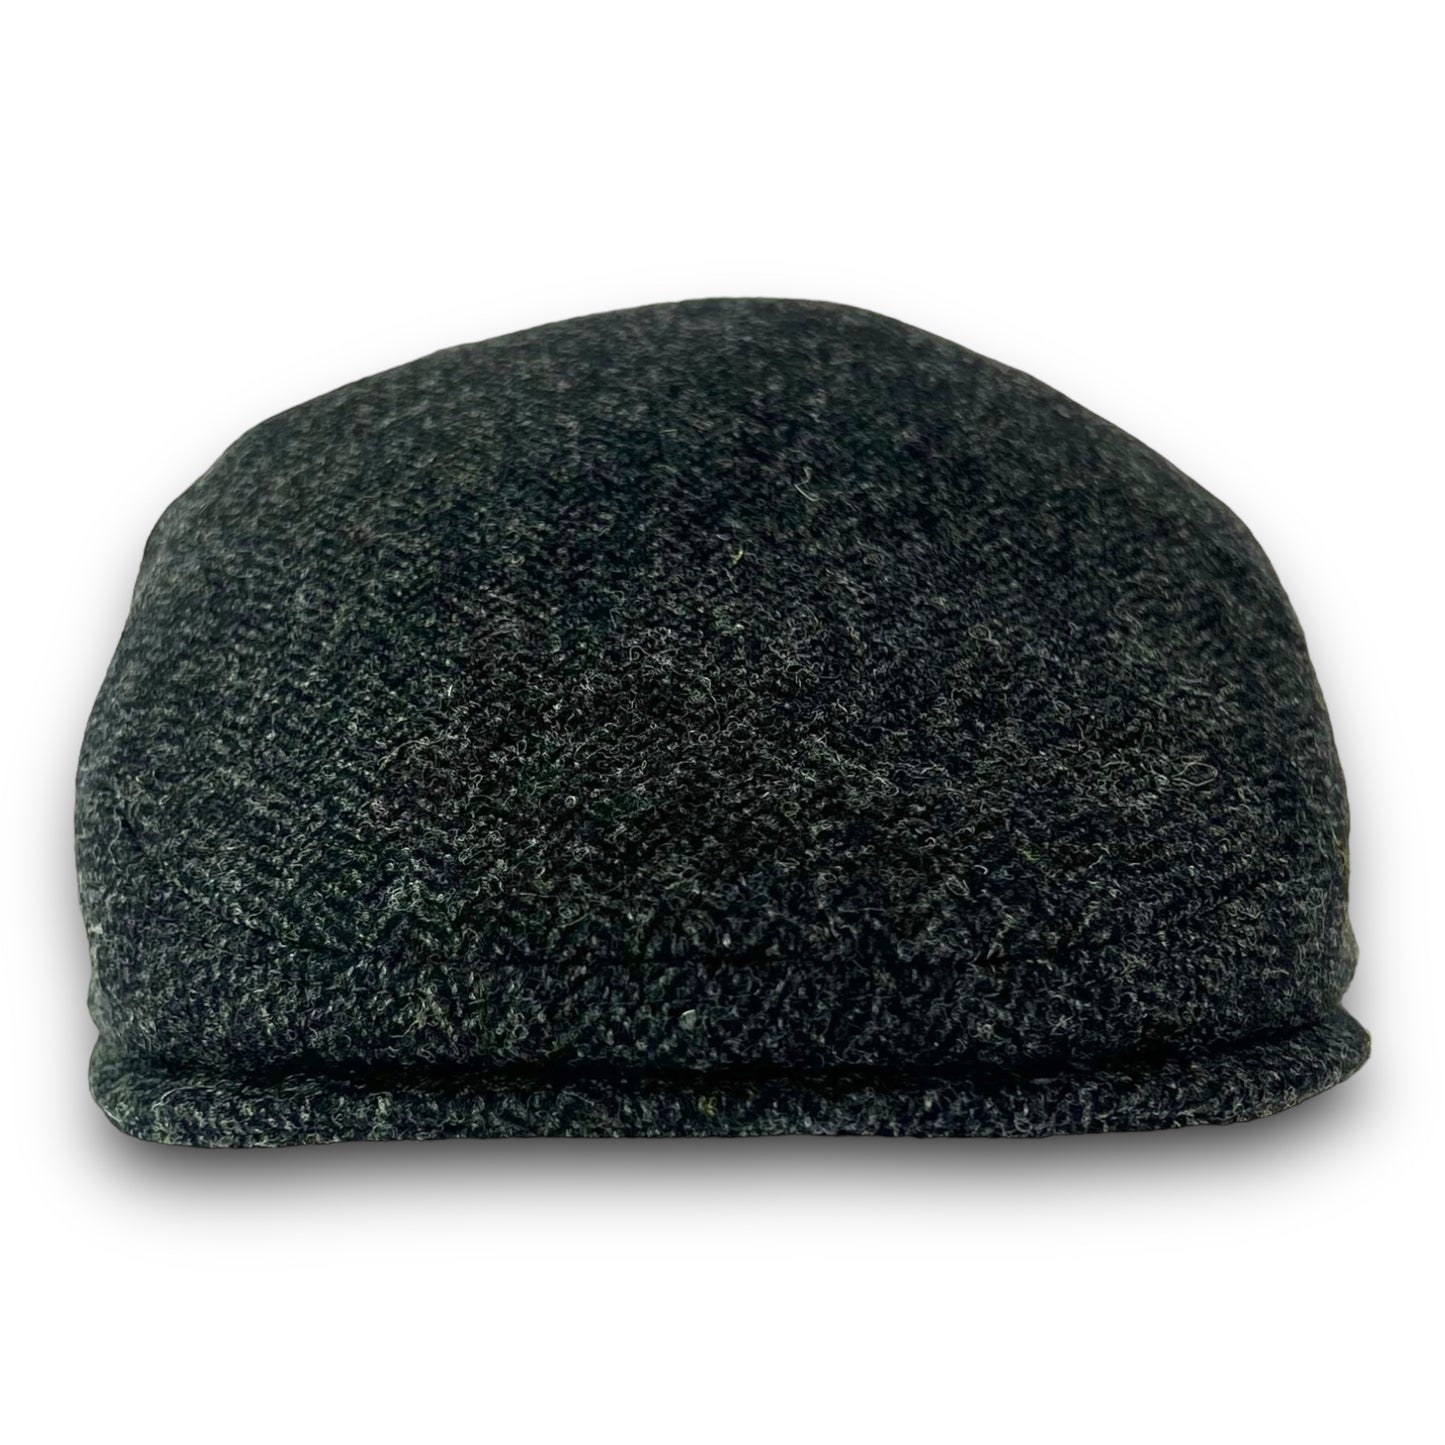 Black and Charcoal Grey Herringbone Wool Men's Sixpence Hat -  Flat Jeff Cap, Ivy Cap, Driving Cap for Men, Women, and Children